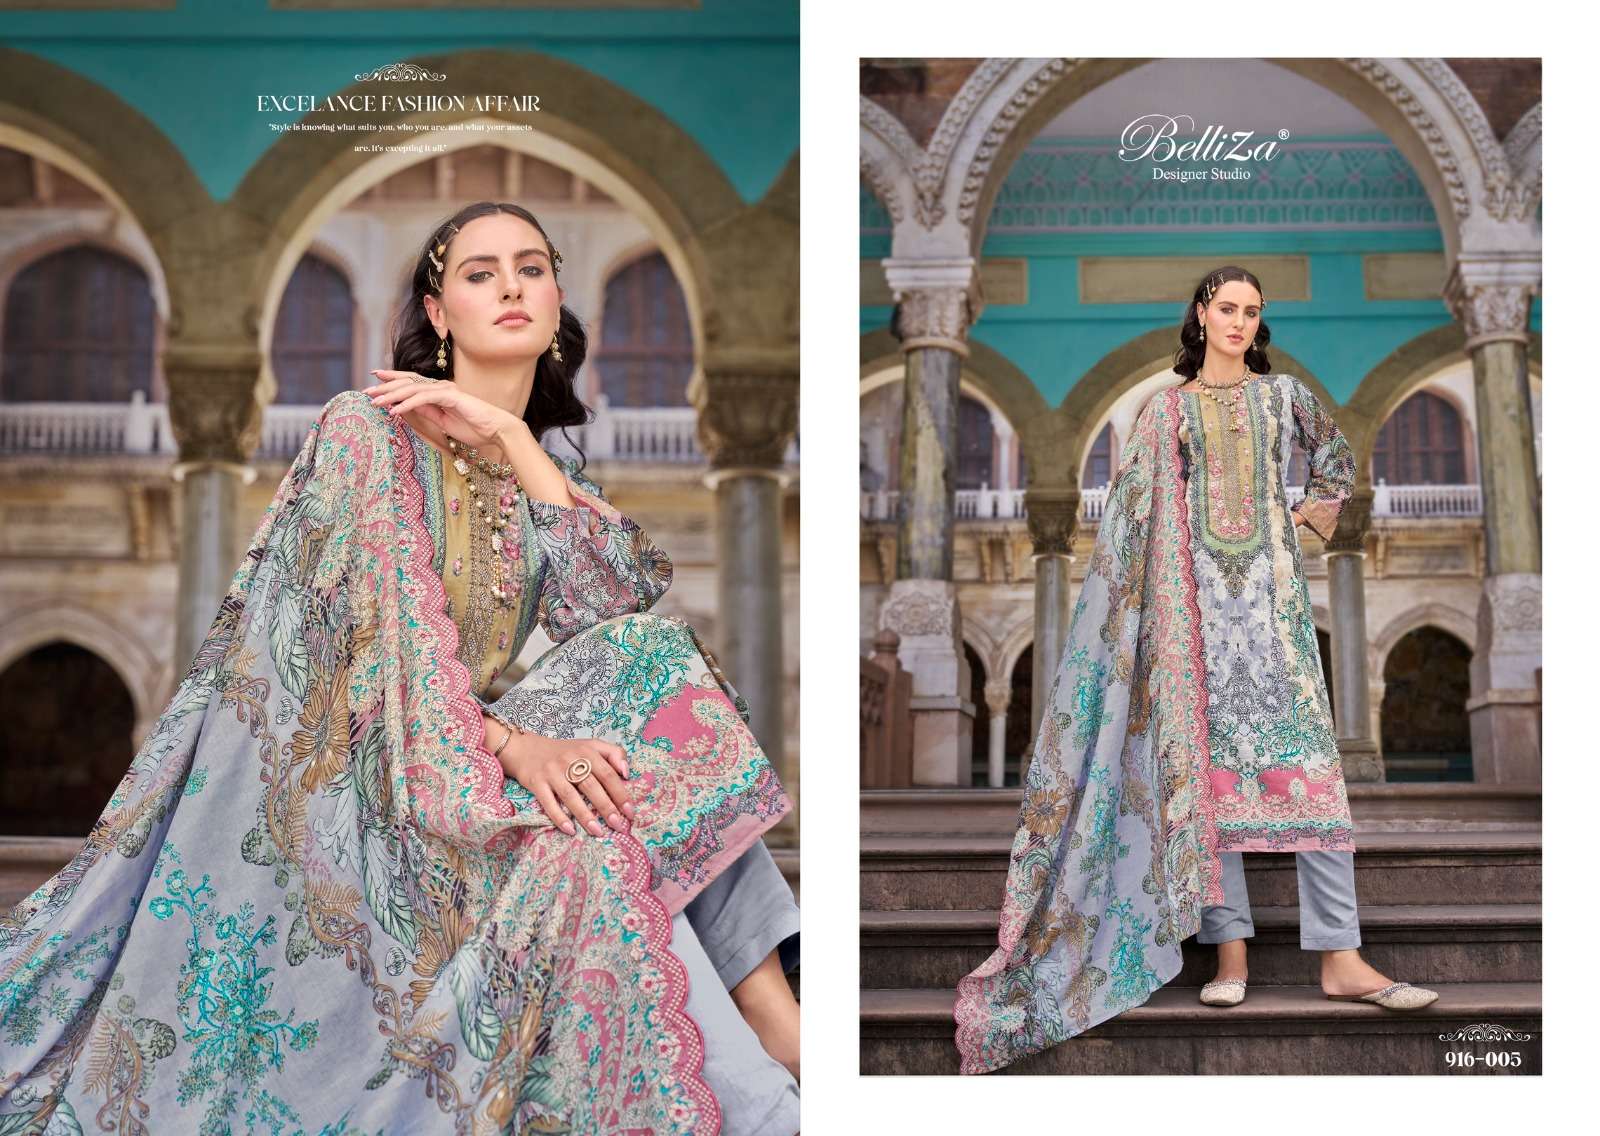 Belliza Guzarish Vol 8 Cotton Digital Printed Dress Material Wholesale catalog